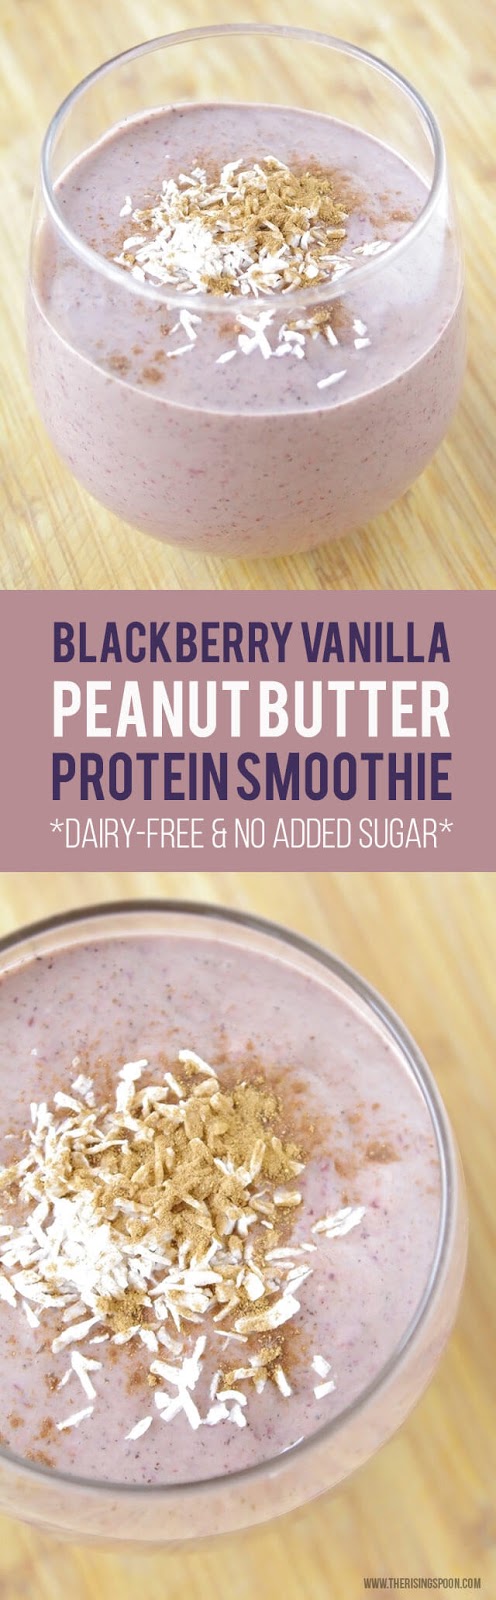 Healthy Blackberry Peanut Butter Protein Smoothie